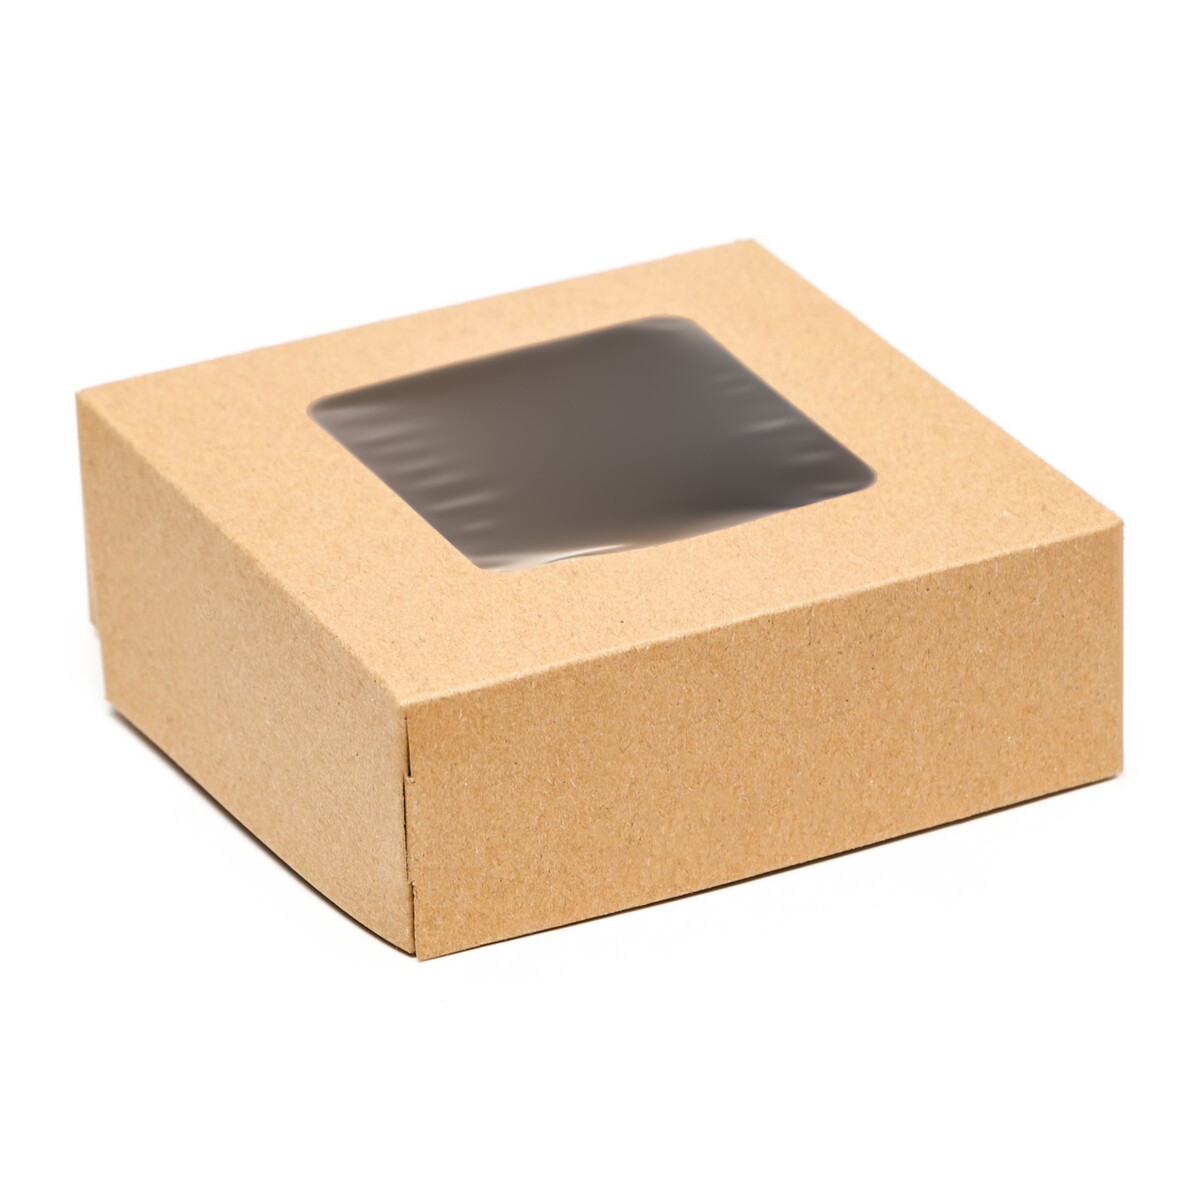 Коробка складная, с окном, крафт, 11,5 х 11,5 х 4 см, набор 10 шт. UPAK LAND